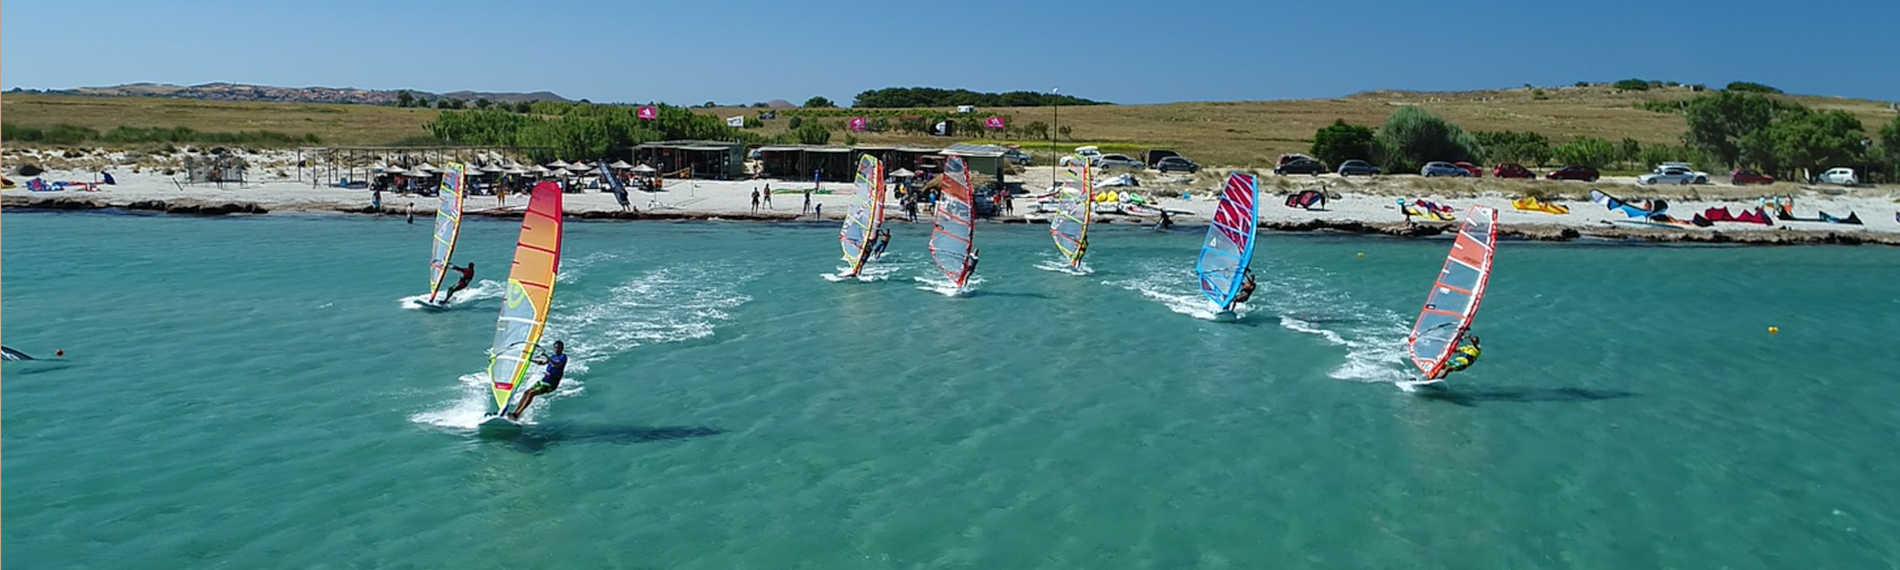 Limnos - Surf Club Keros- Windsurf Action